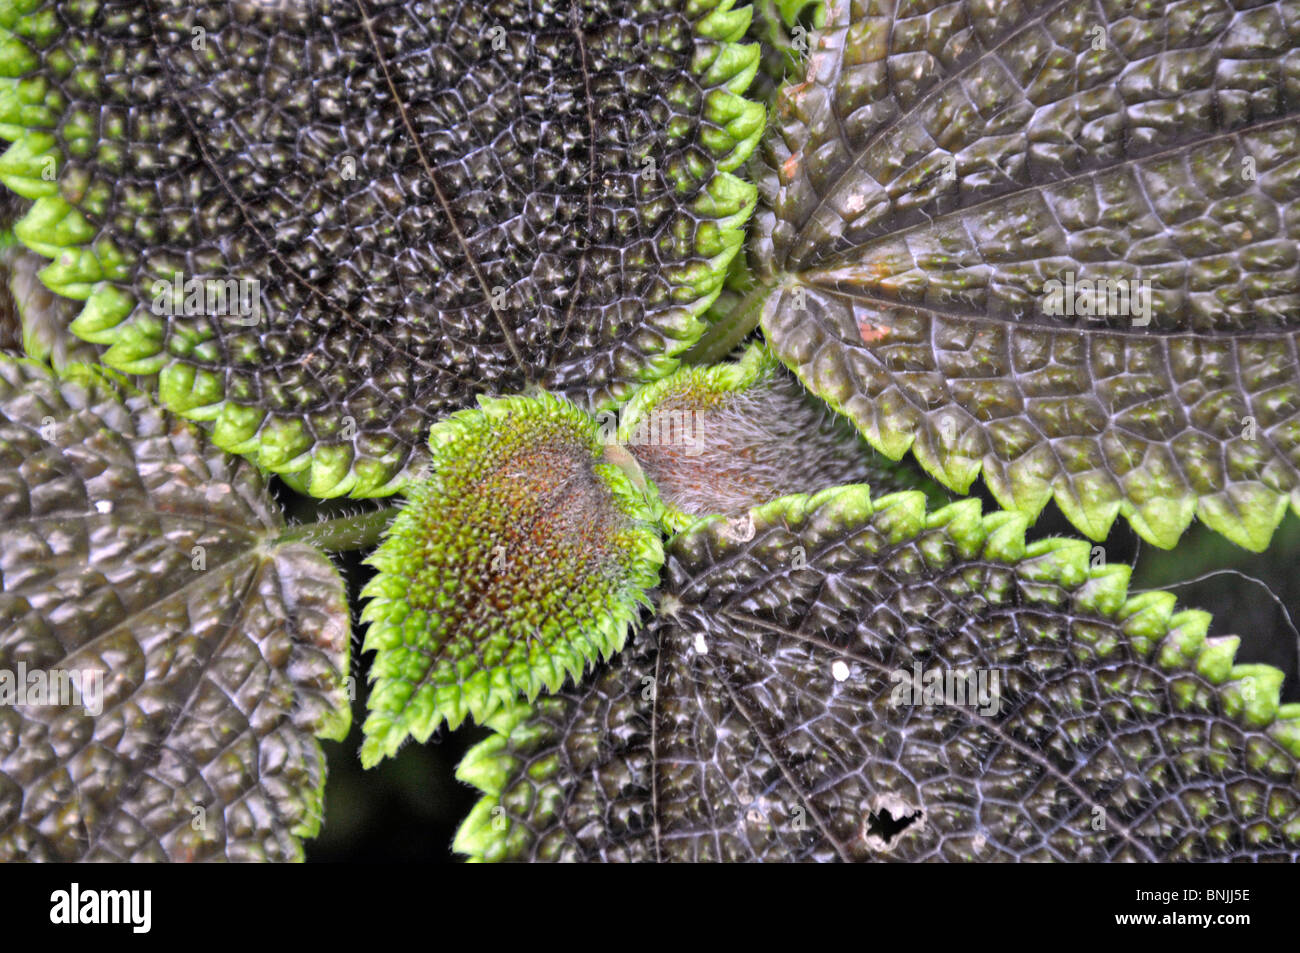 Background nature plant plants plant world Pilea mollis South America Urticaceae Kanonierblume sheets leaves close-up detail Stock Photo